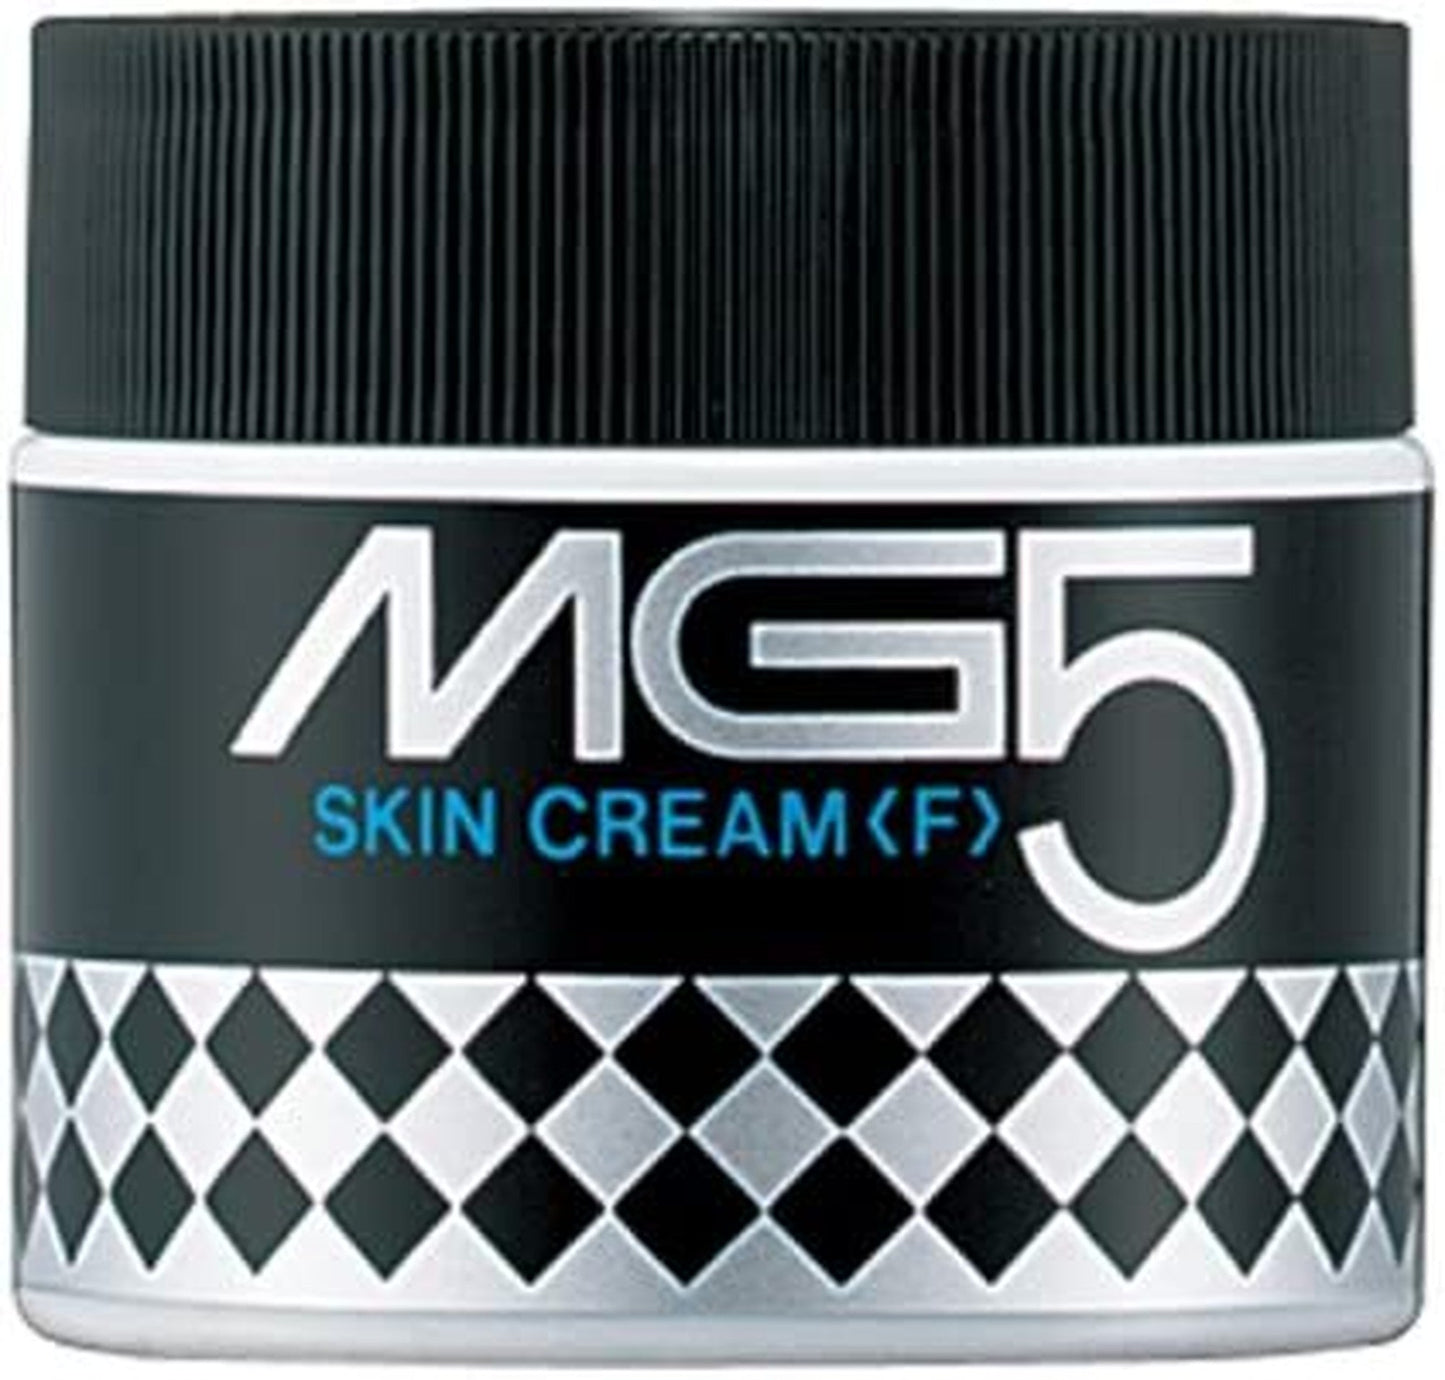 Shiseido MG5 Skin Cream (F) 50g JAN:4901872333752